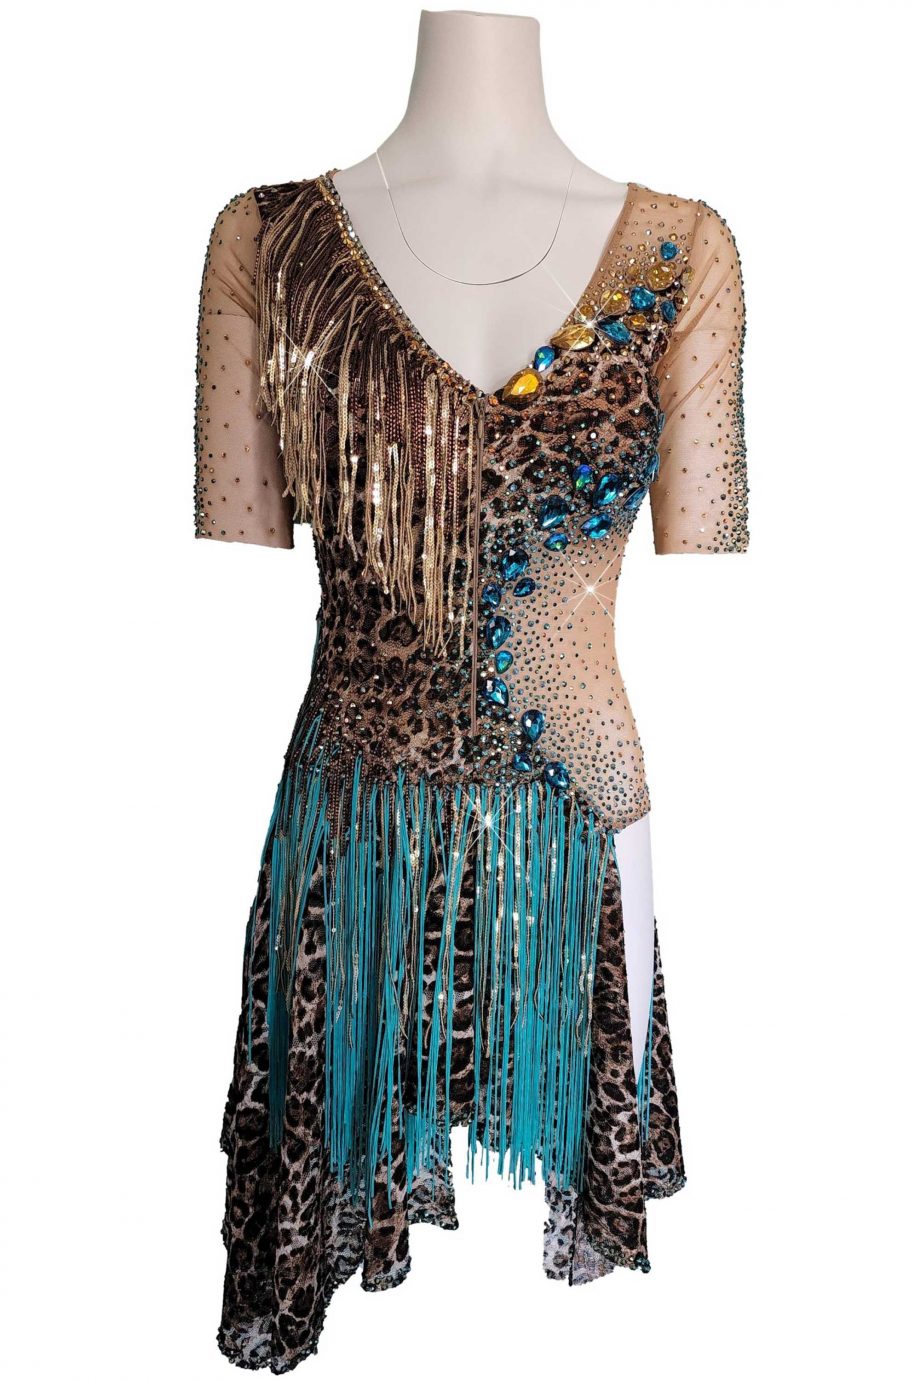 Cashay designer Latin dress | Tiger Front